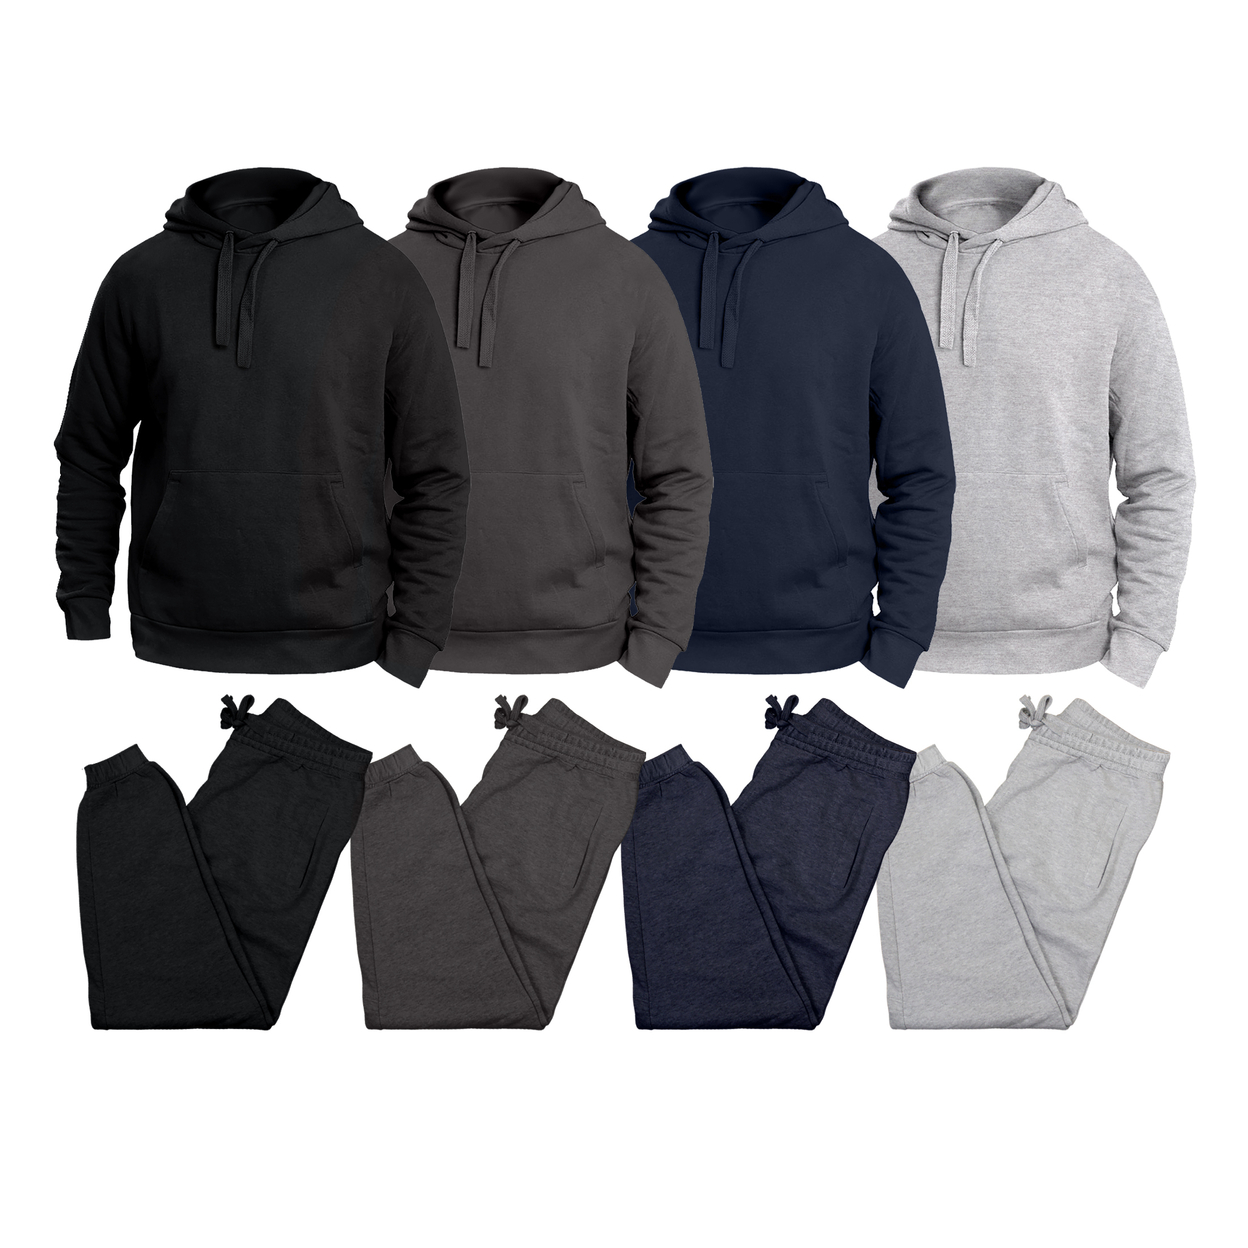 Multi-Pack: Big & Tall Men's Winter Warm Cozy Athletic Fleece Lined Multi-Pocket Cargo Sweatsuit - Black, 1-pack, Medium